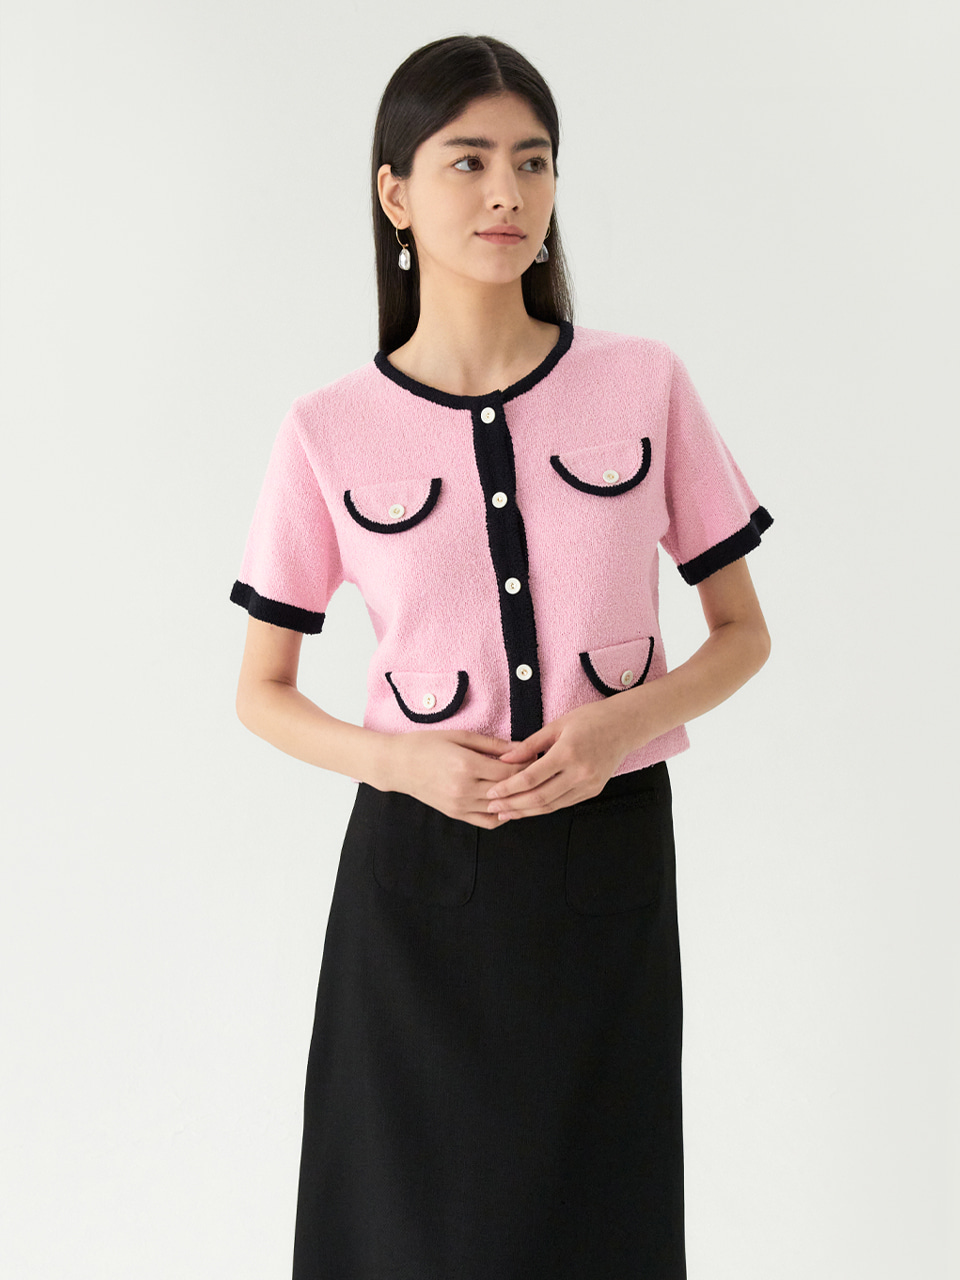 Pocket binder Knit Cardigan (Pink)